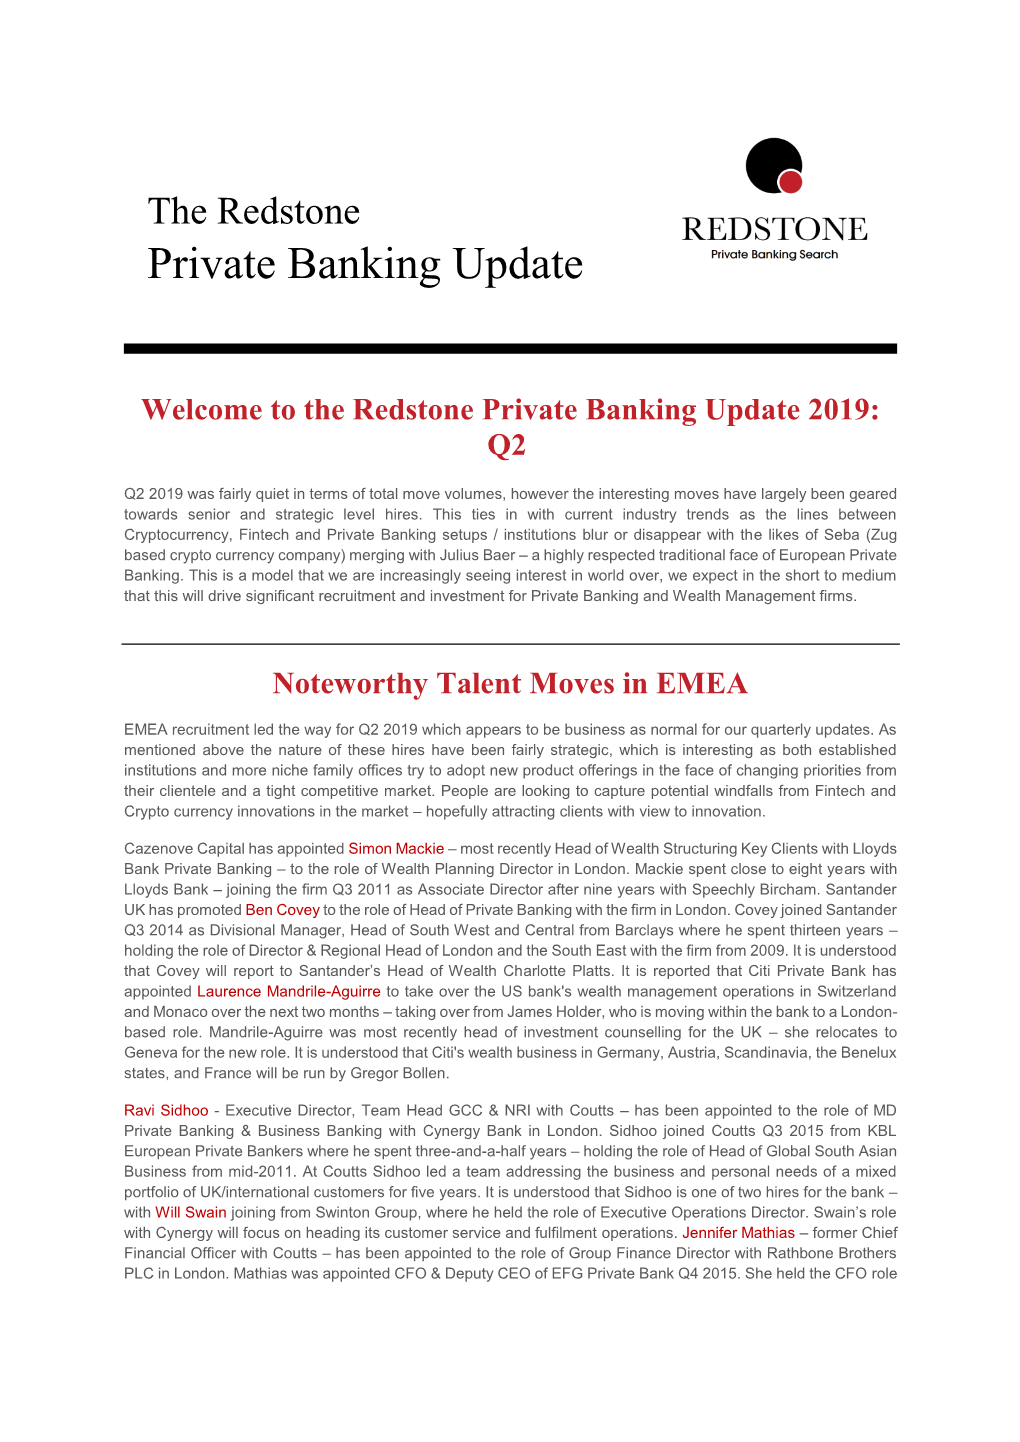 Redstone Private Banking Update Q2 2019